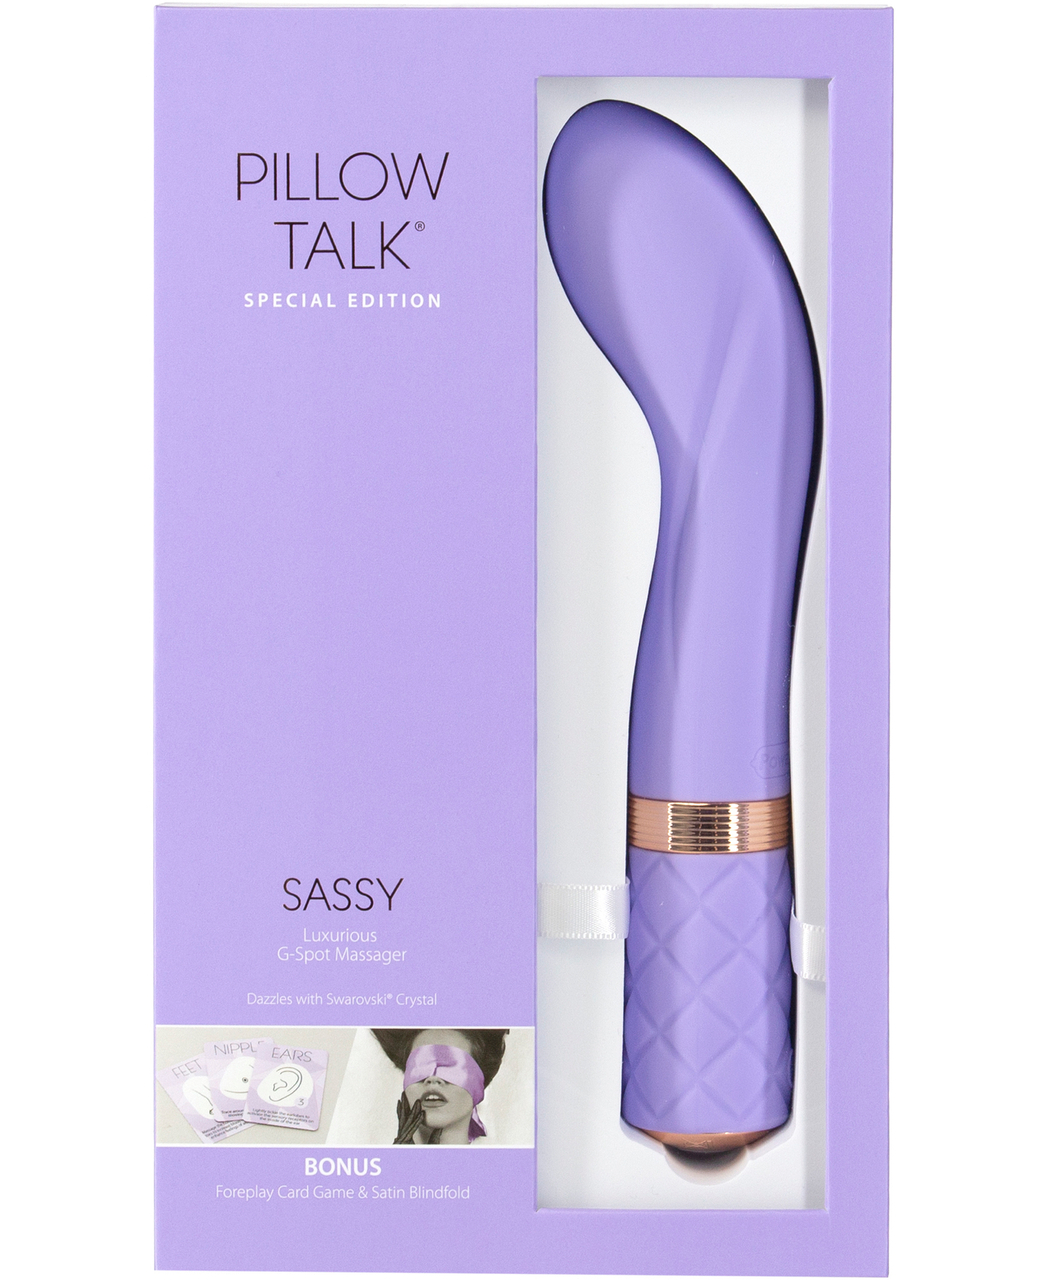 Pillow Talk Sassy Special Edition Luxurios G-Spot vibrator